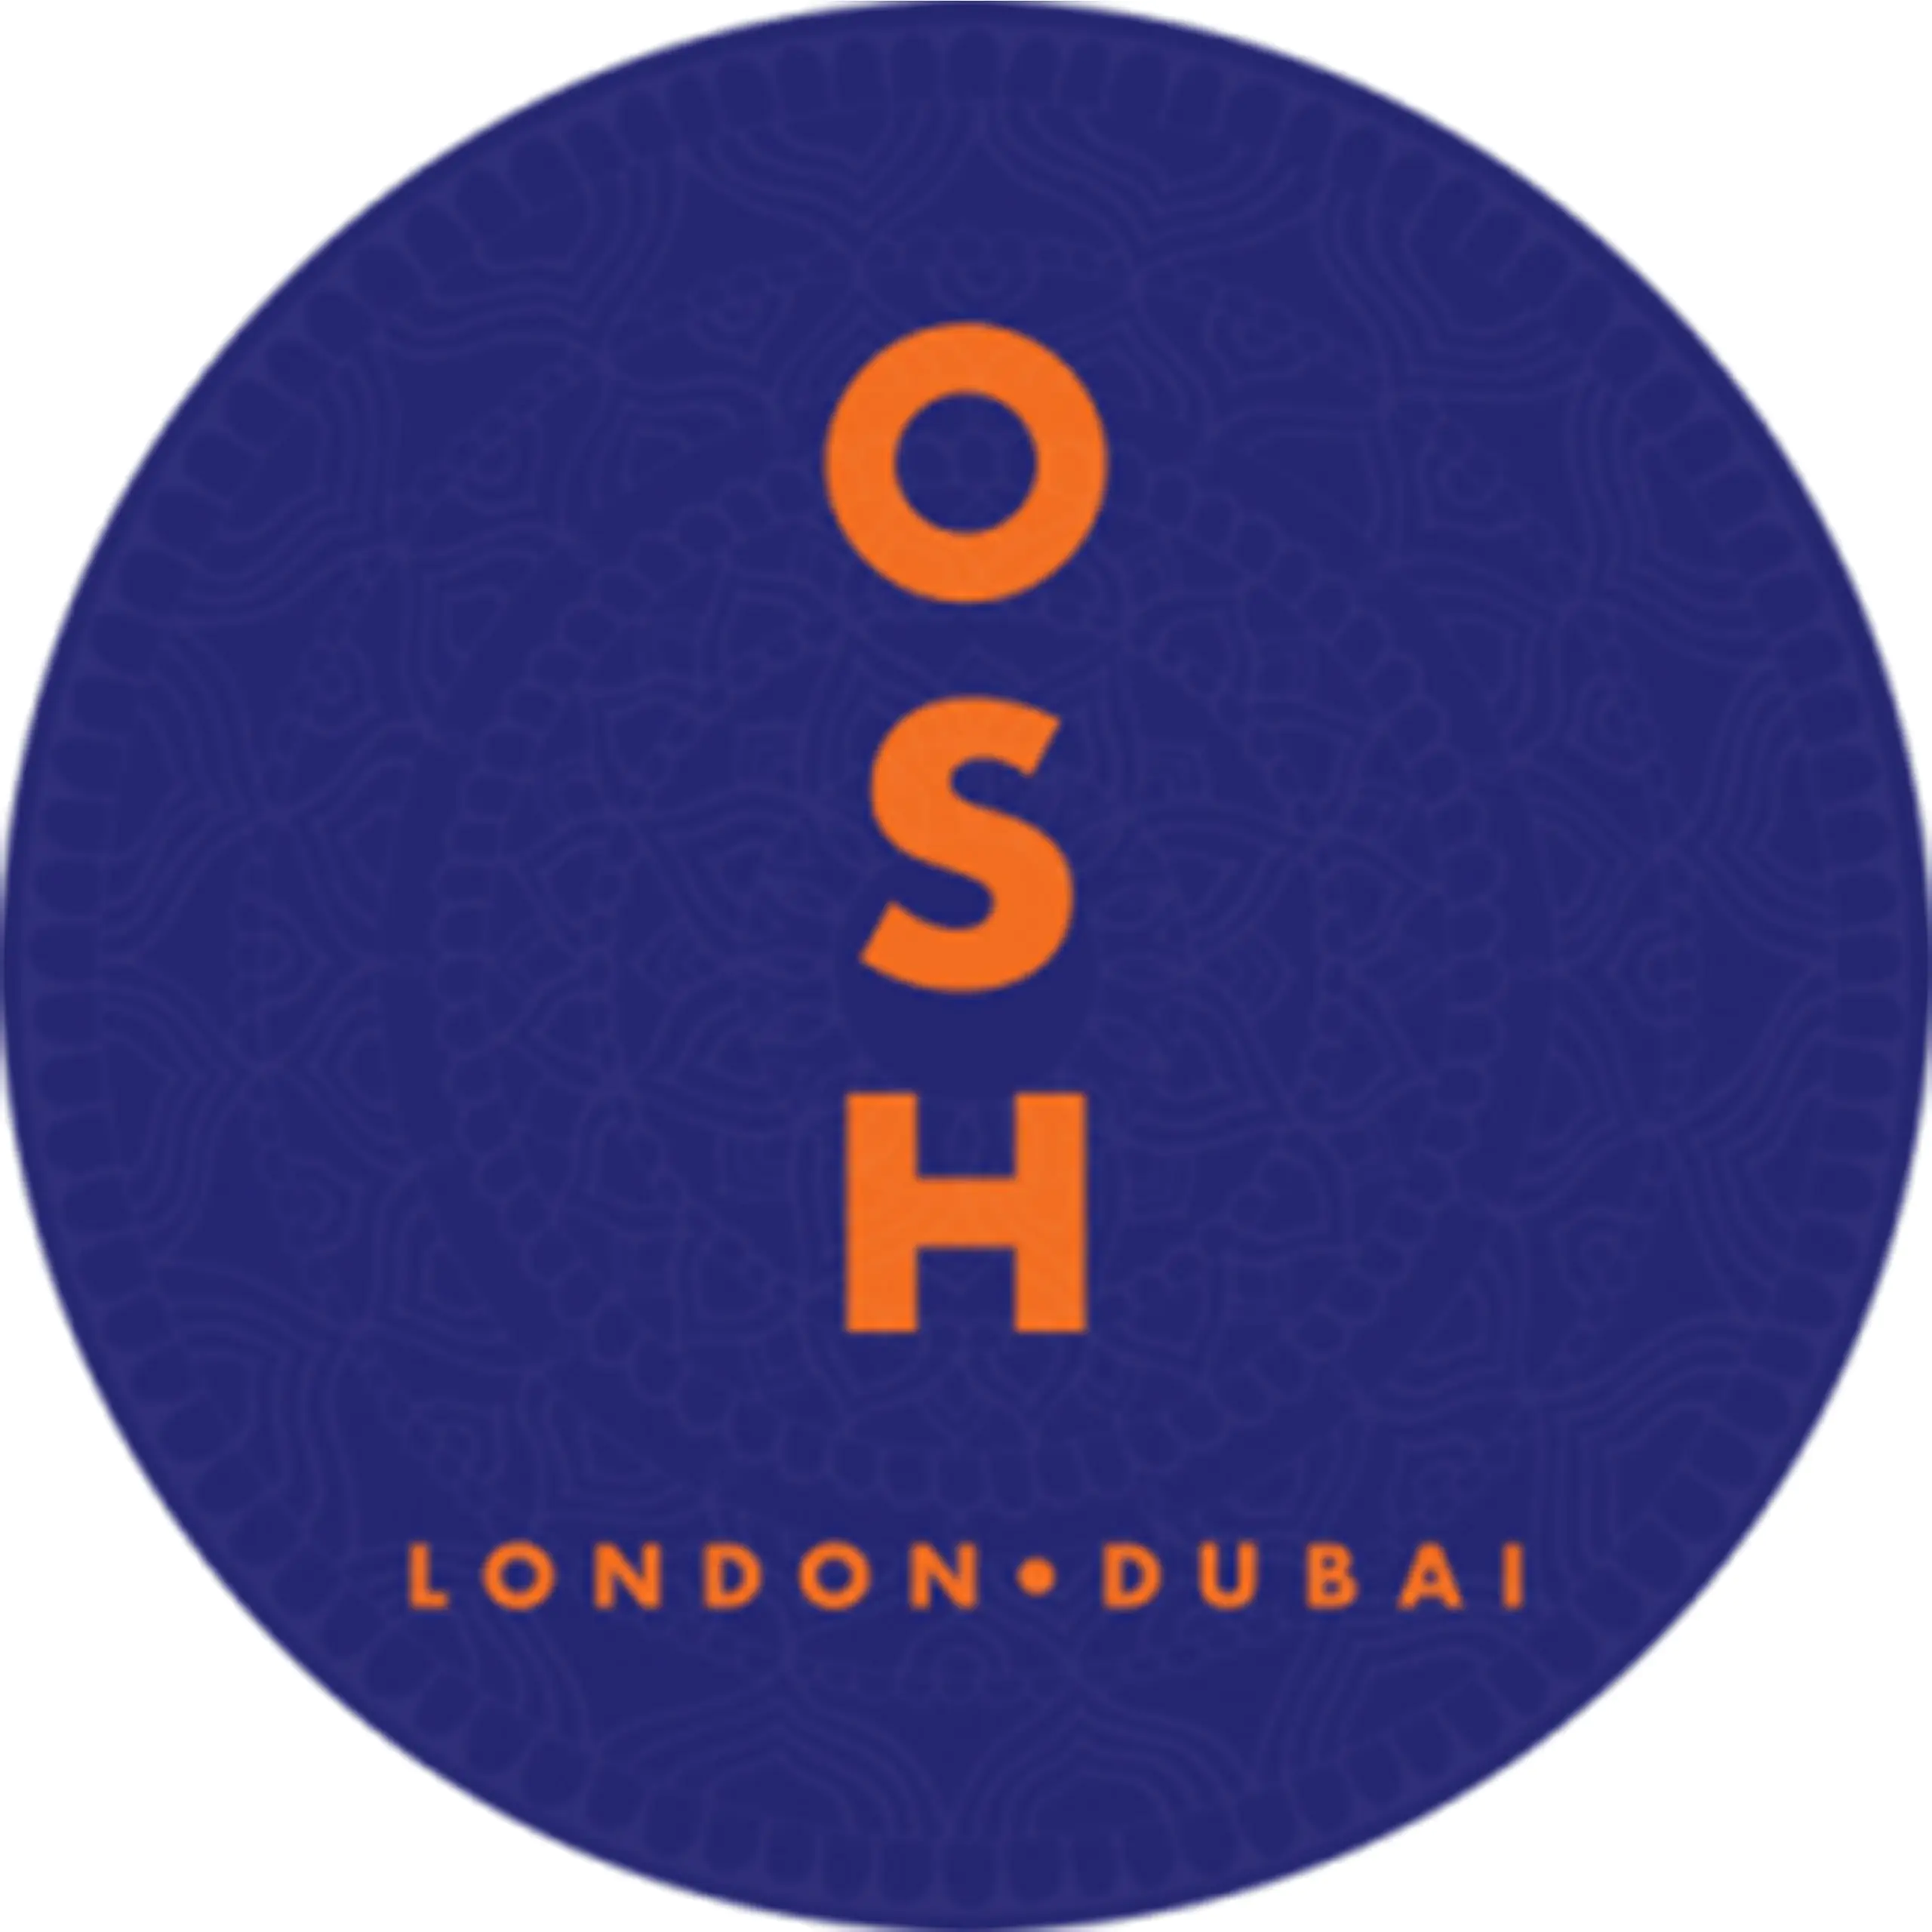 OSH - Coming Soon in UAE